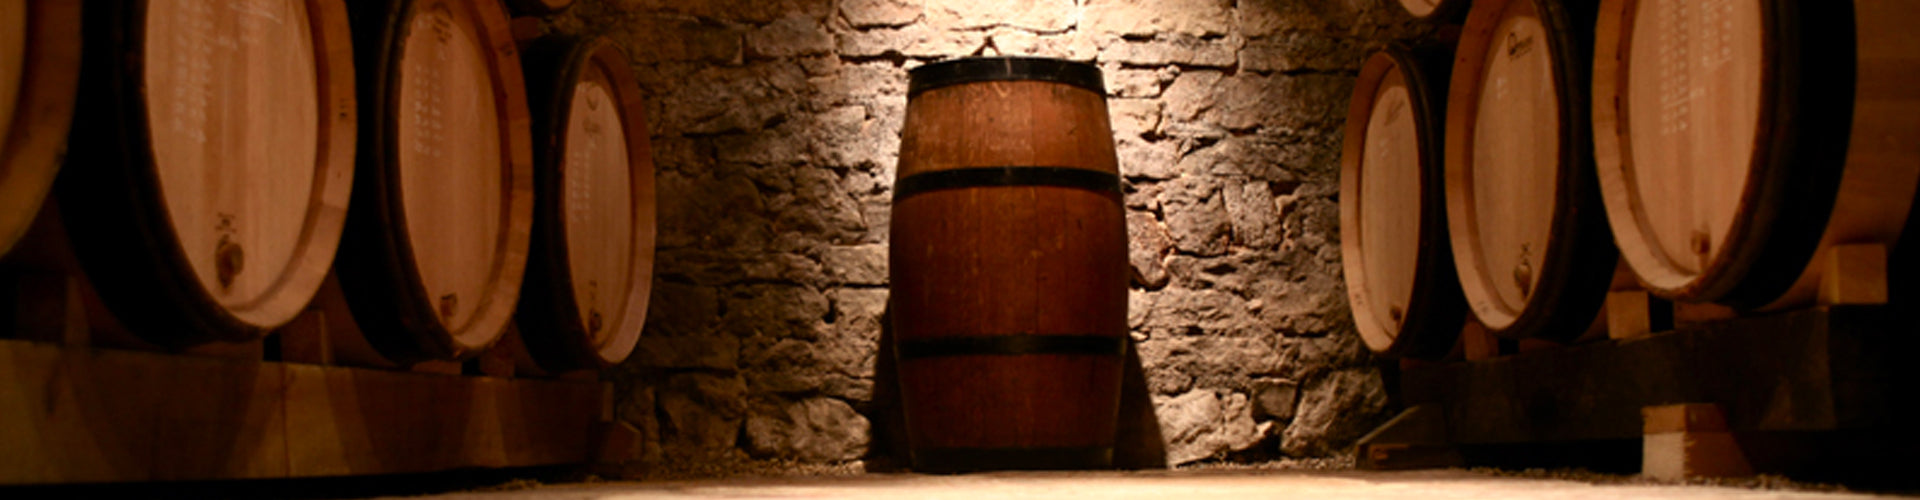 Inside the Etienne Sauzet barrel cellar